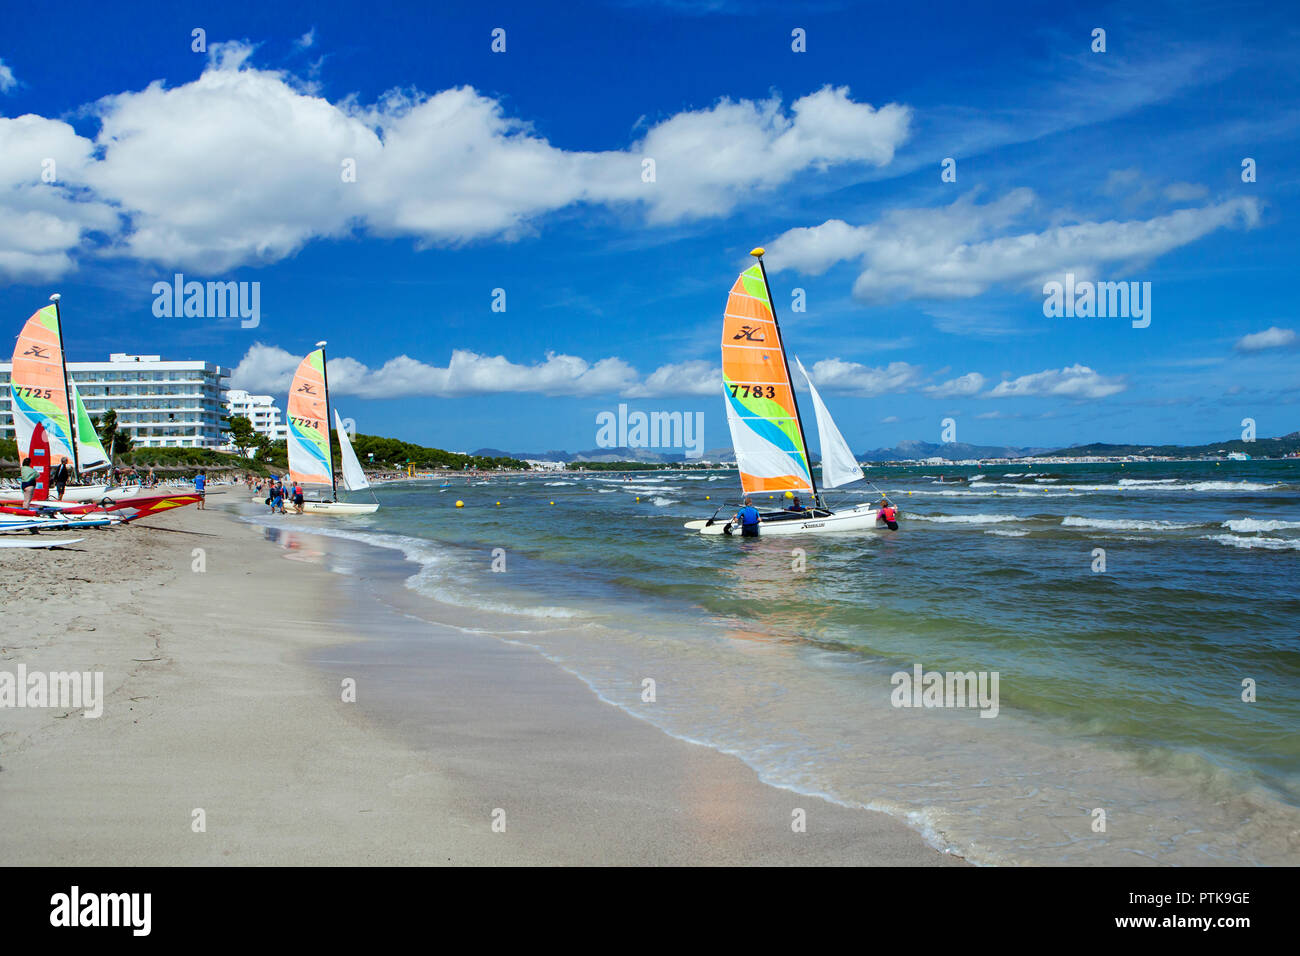 PORT D'ALCUDIA, MAJORCA, SPAIN - September 30th, 2018: People enjoy water sports on Playa de Muro beach Stock Photo